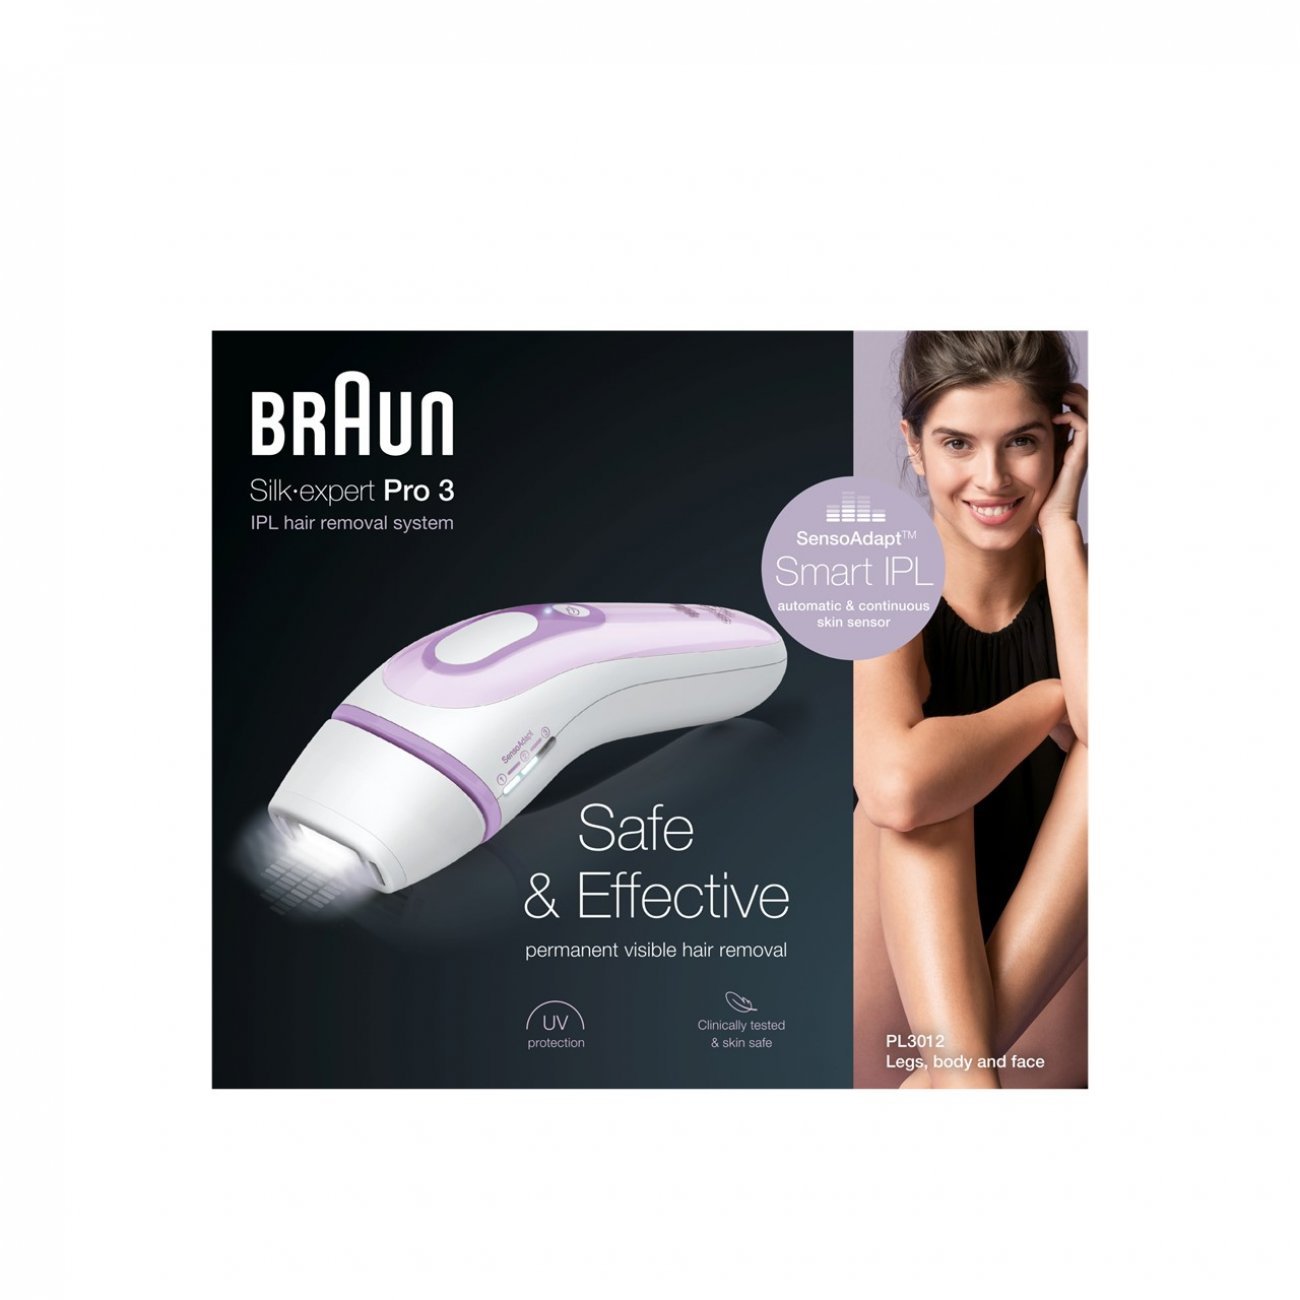 enthousiasme voor mij geloof Buy Braun Silk-Expert Pro 3 IPL Hair Removal System PL3012 · USA